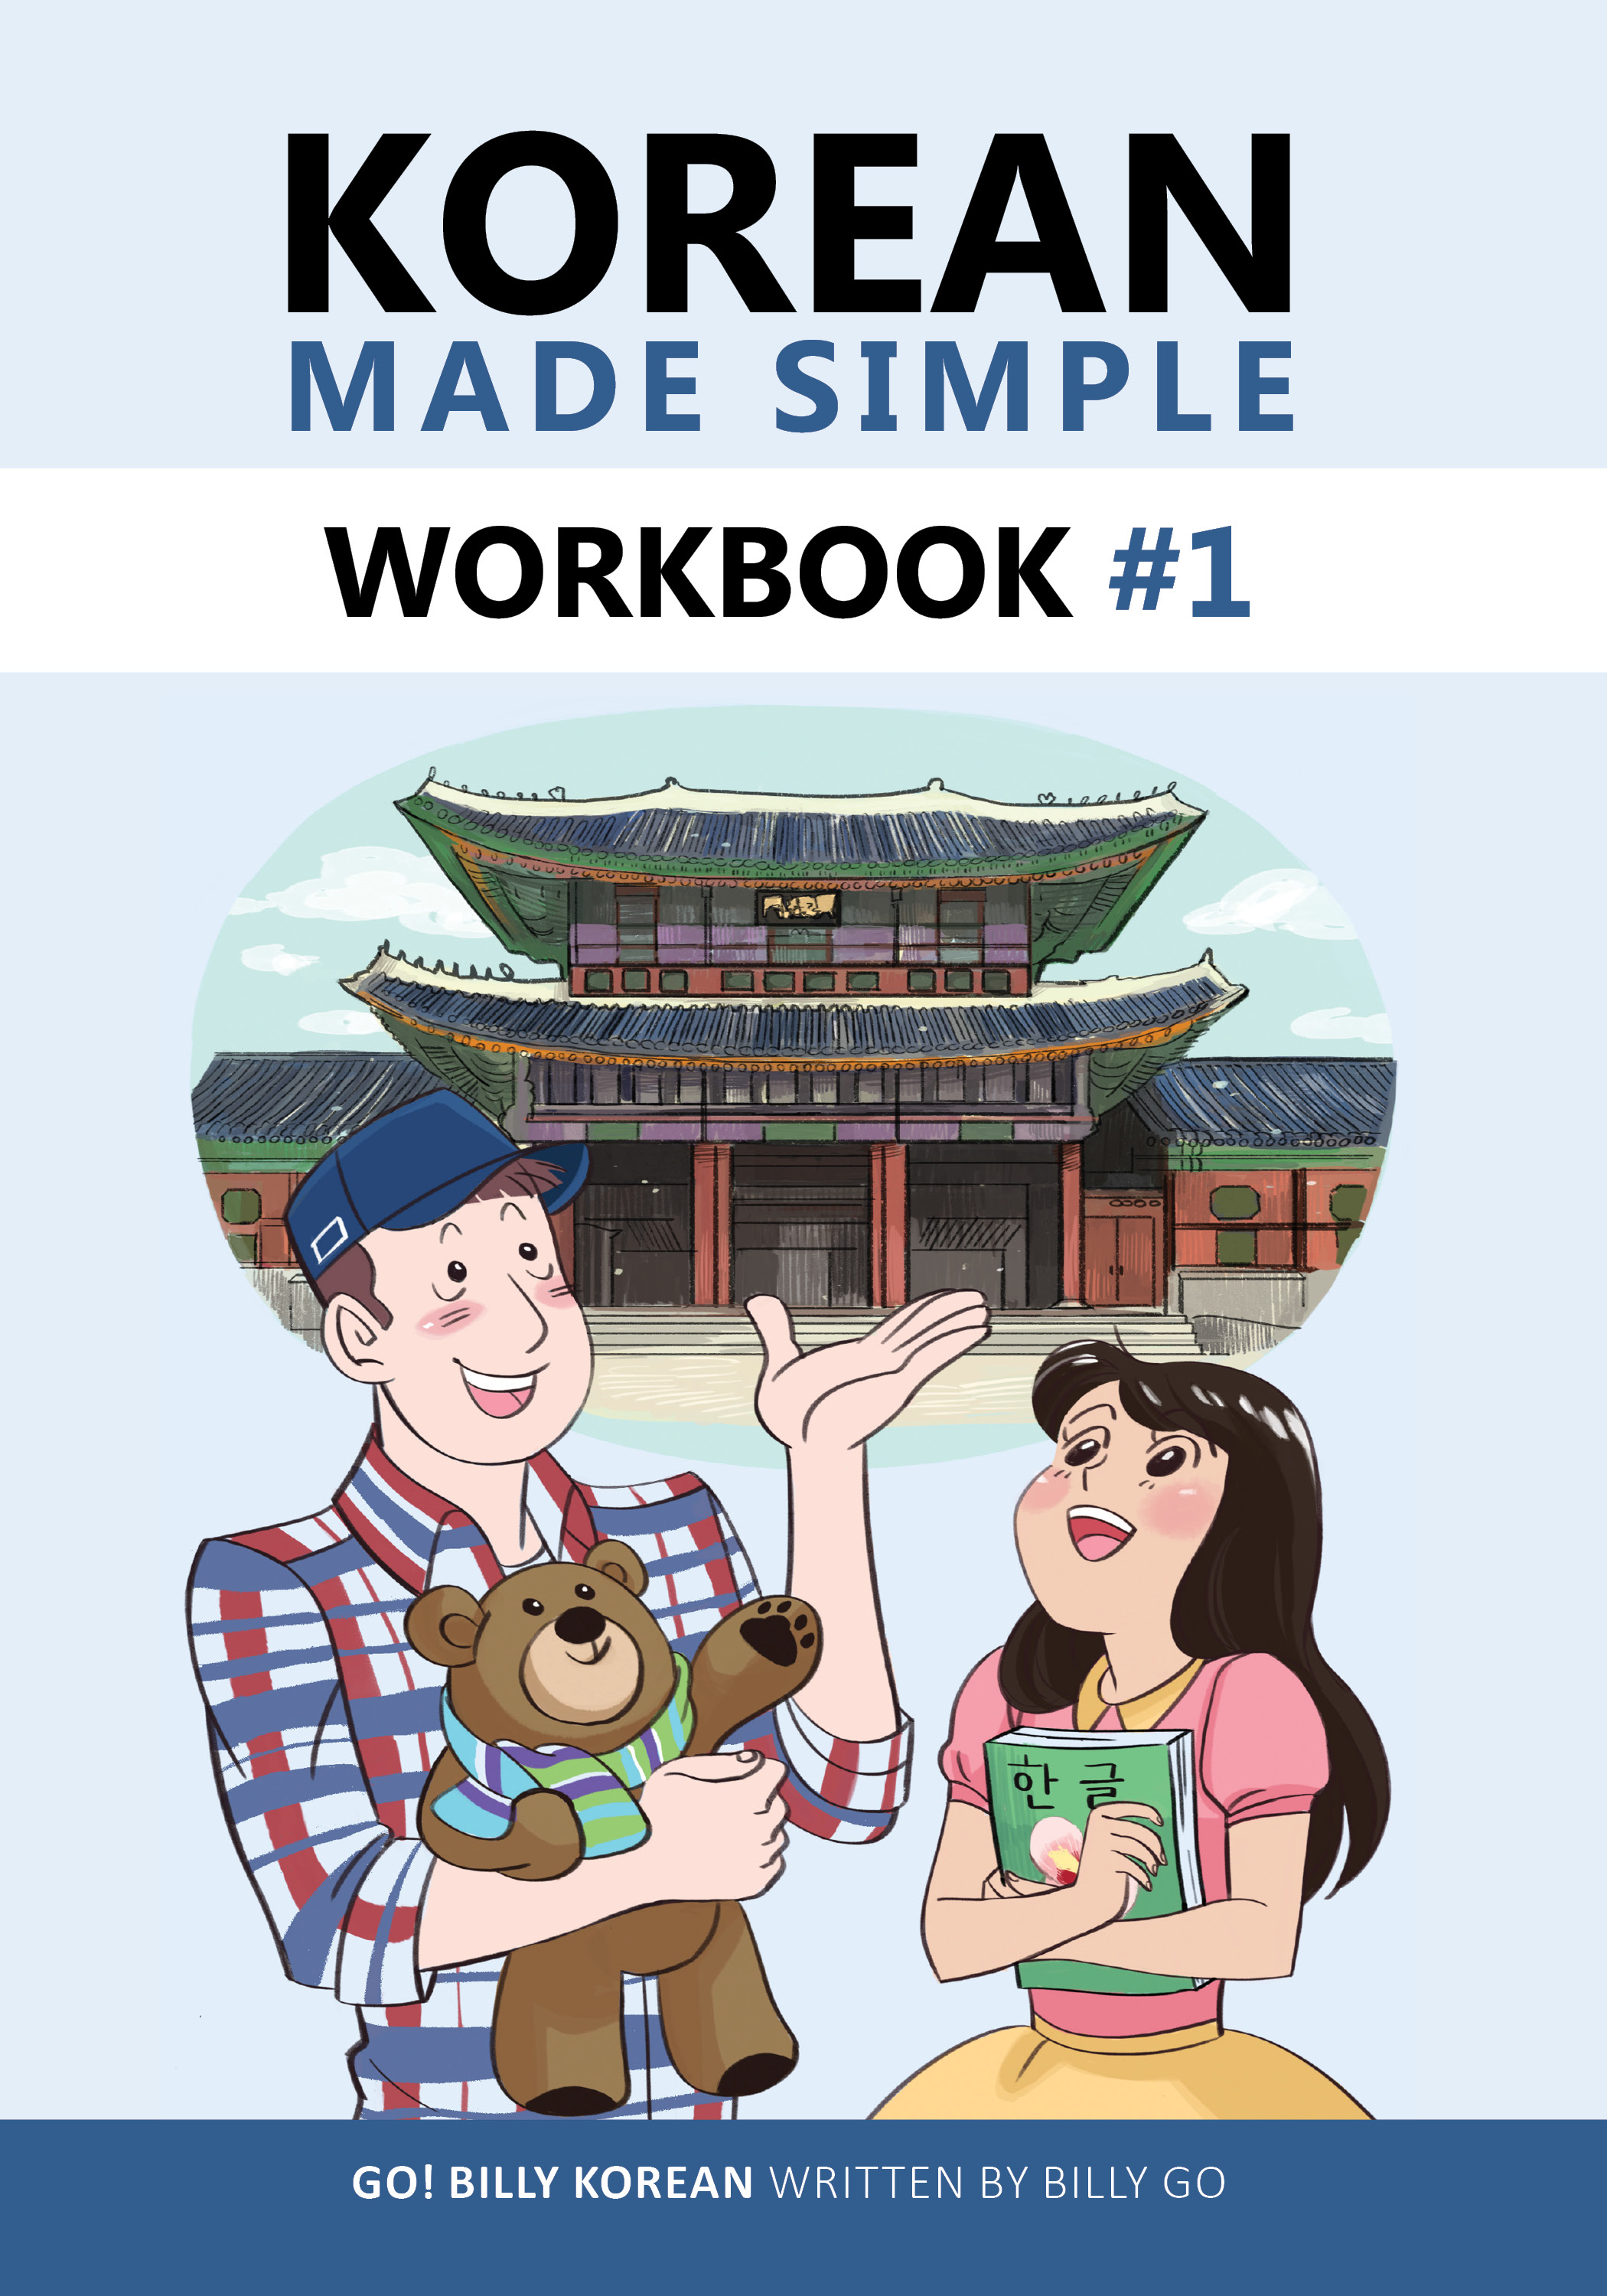 korean-made-simple-workbook-1-is-finally-here-learn-korean-with